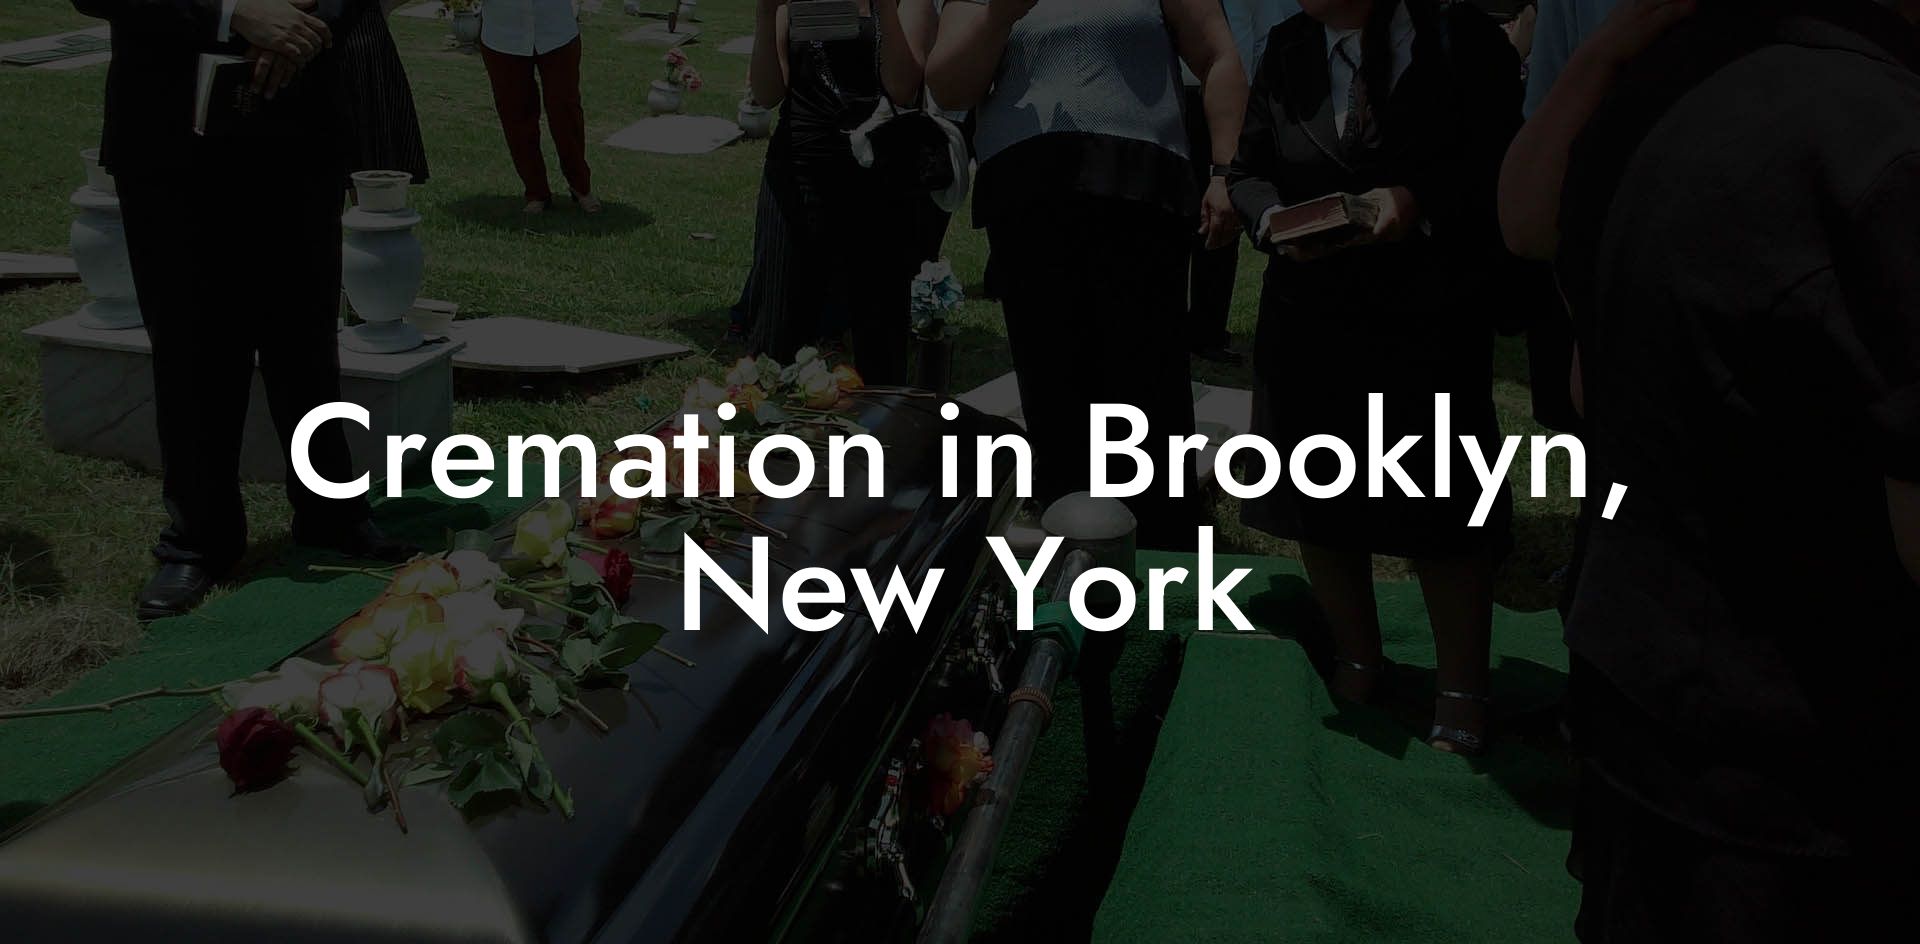 Cremation in Brooklyn, New York